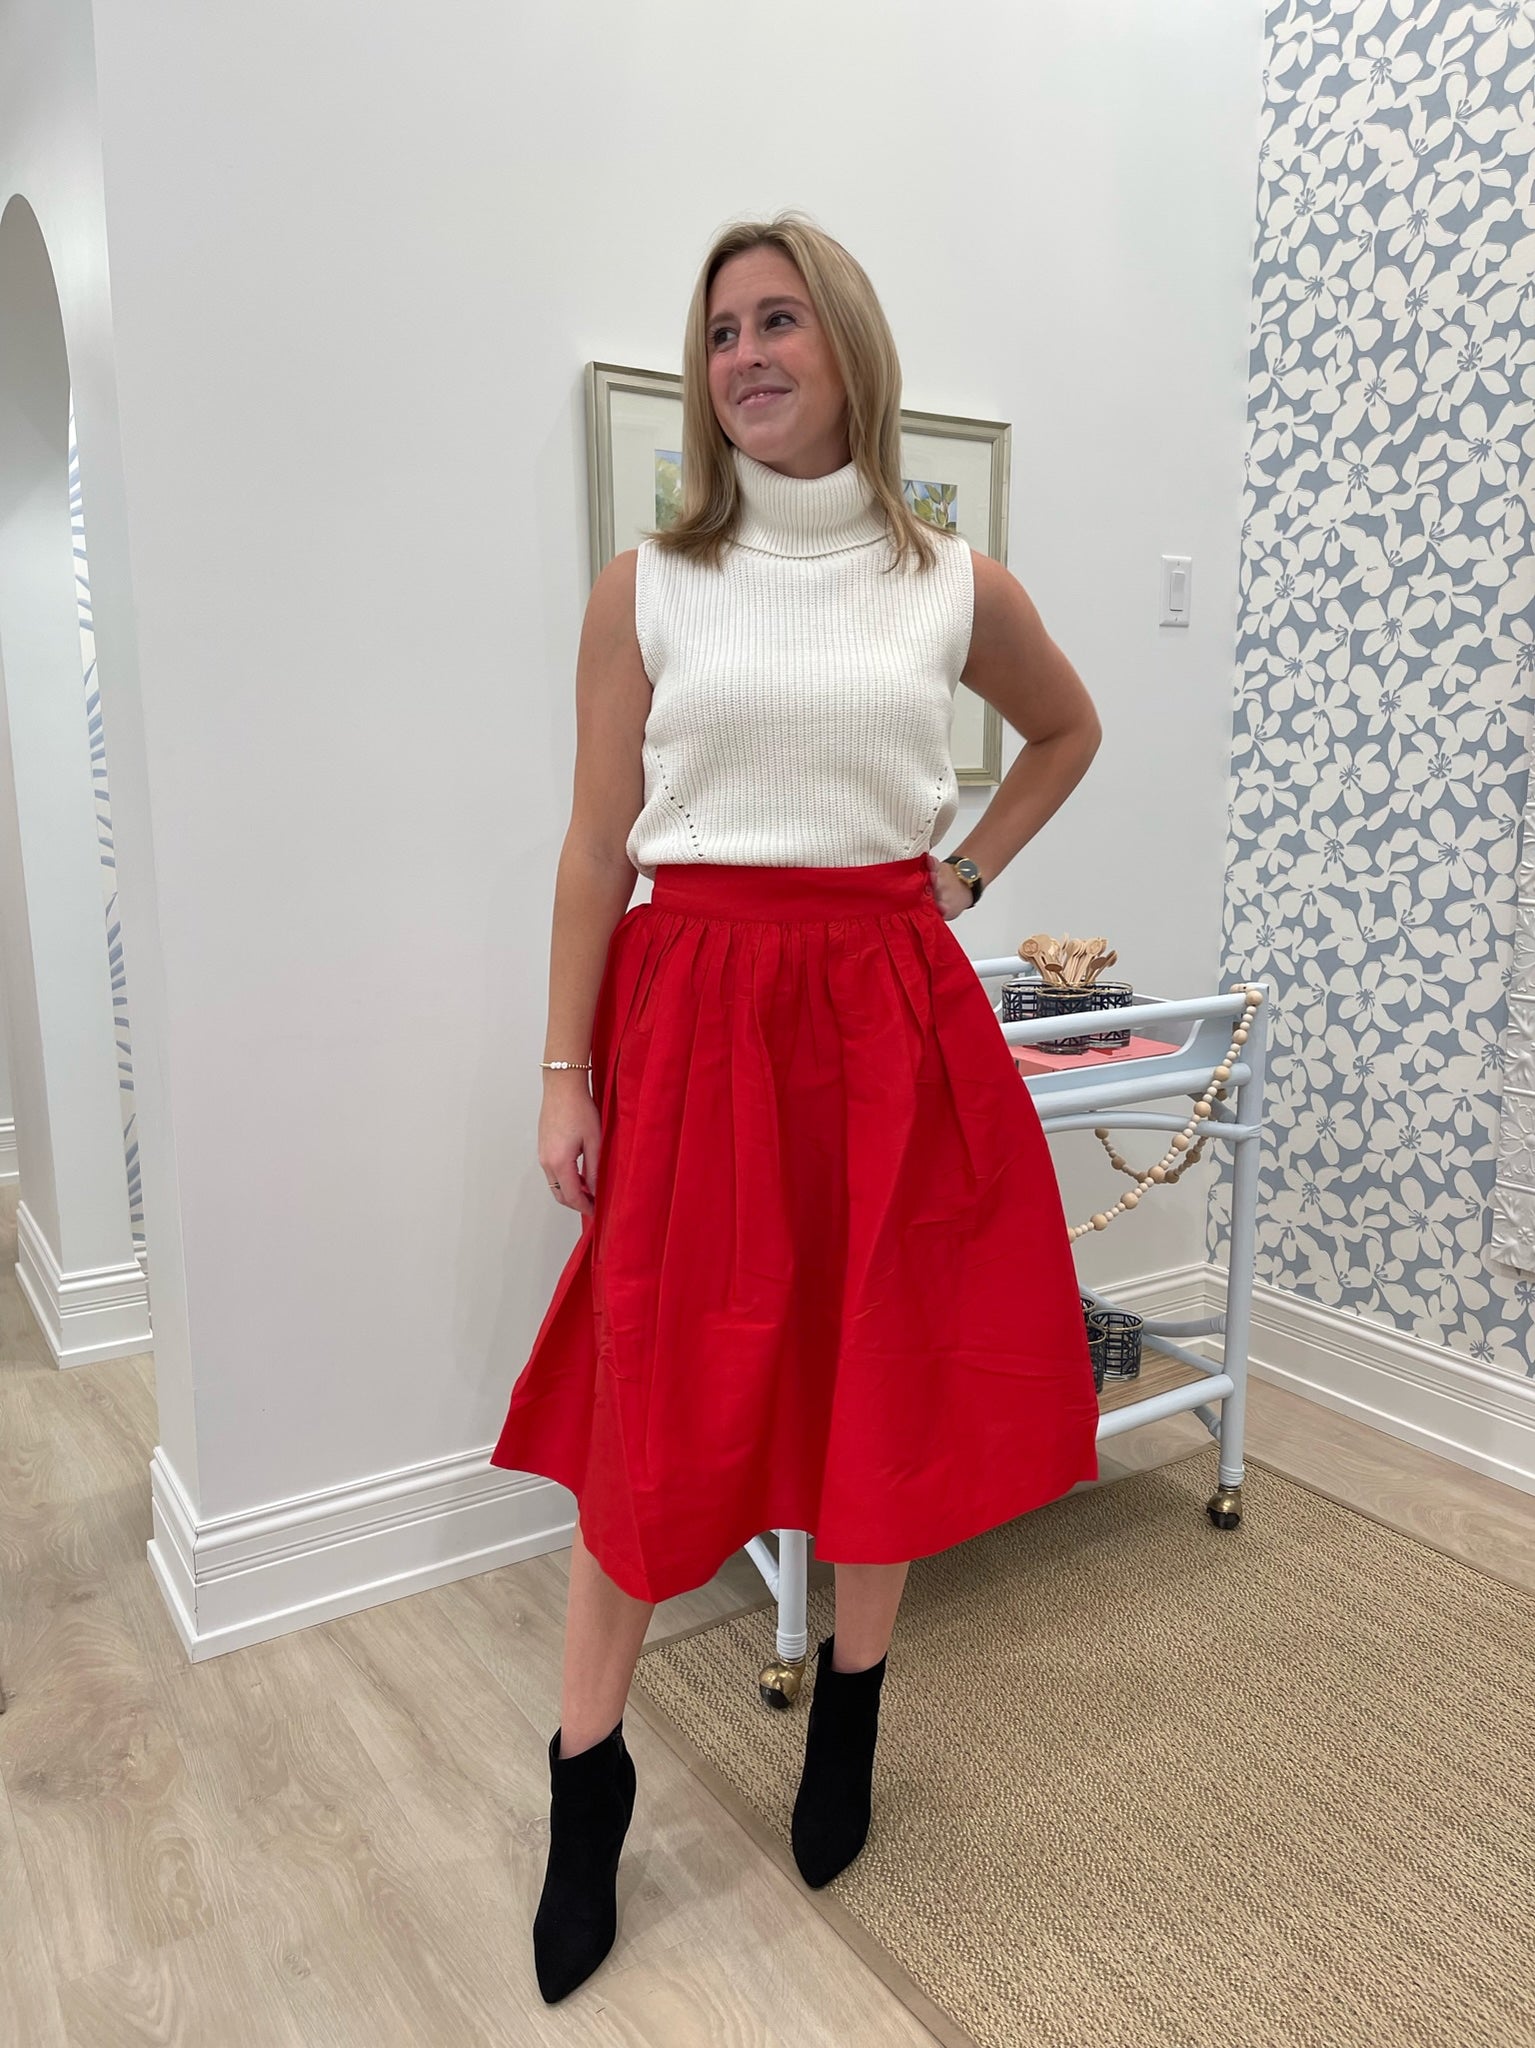 Frances Valentine Barbara Gathered Midi Skirt - Red